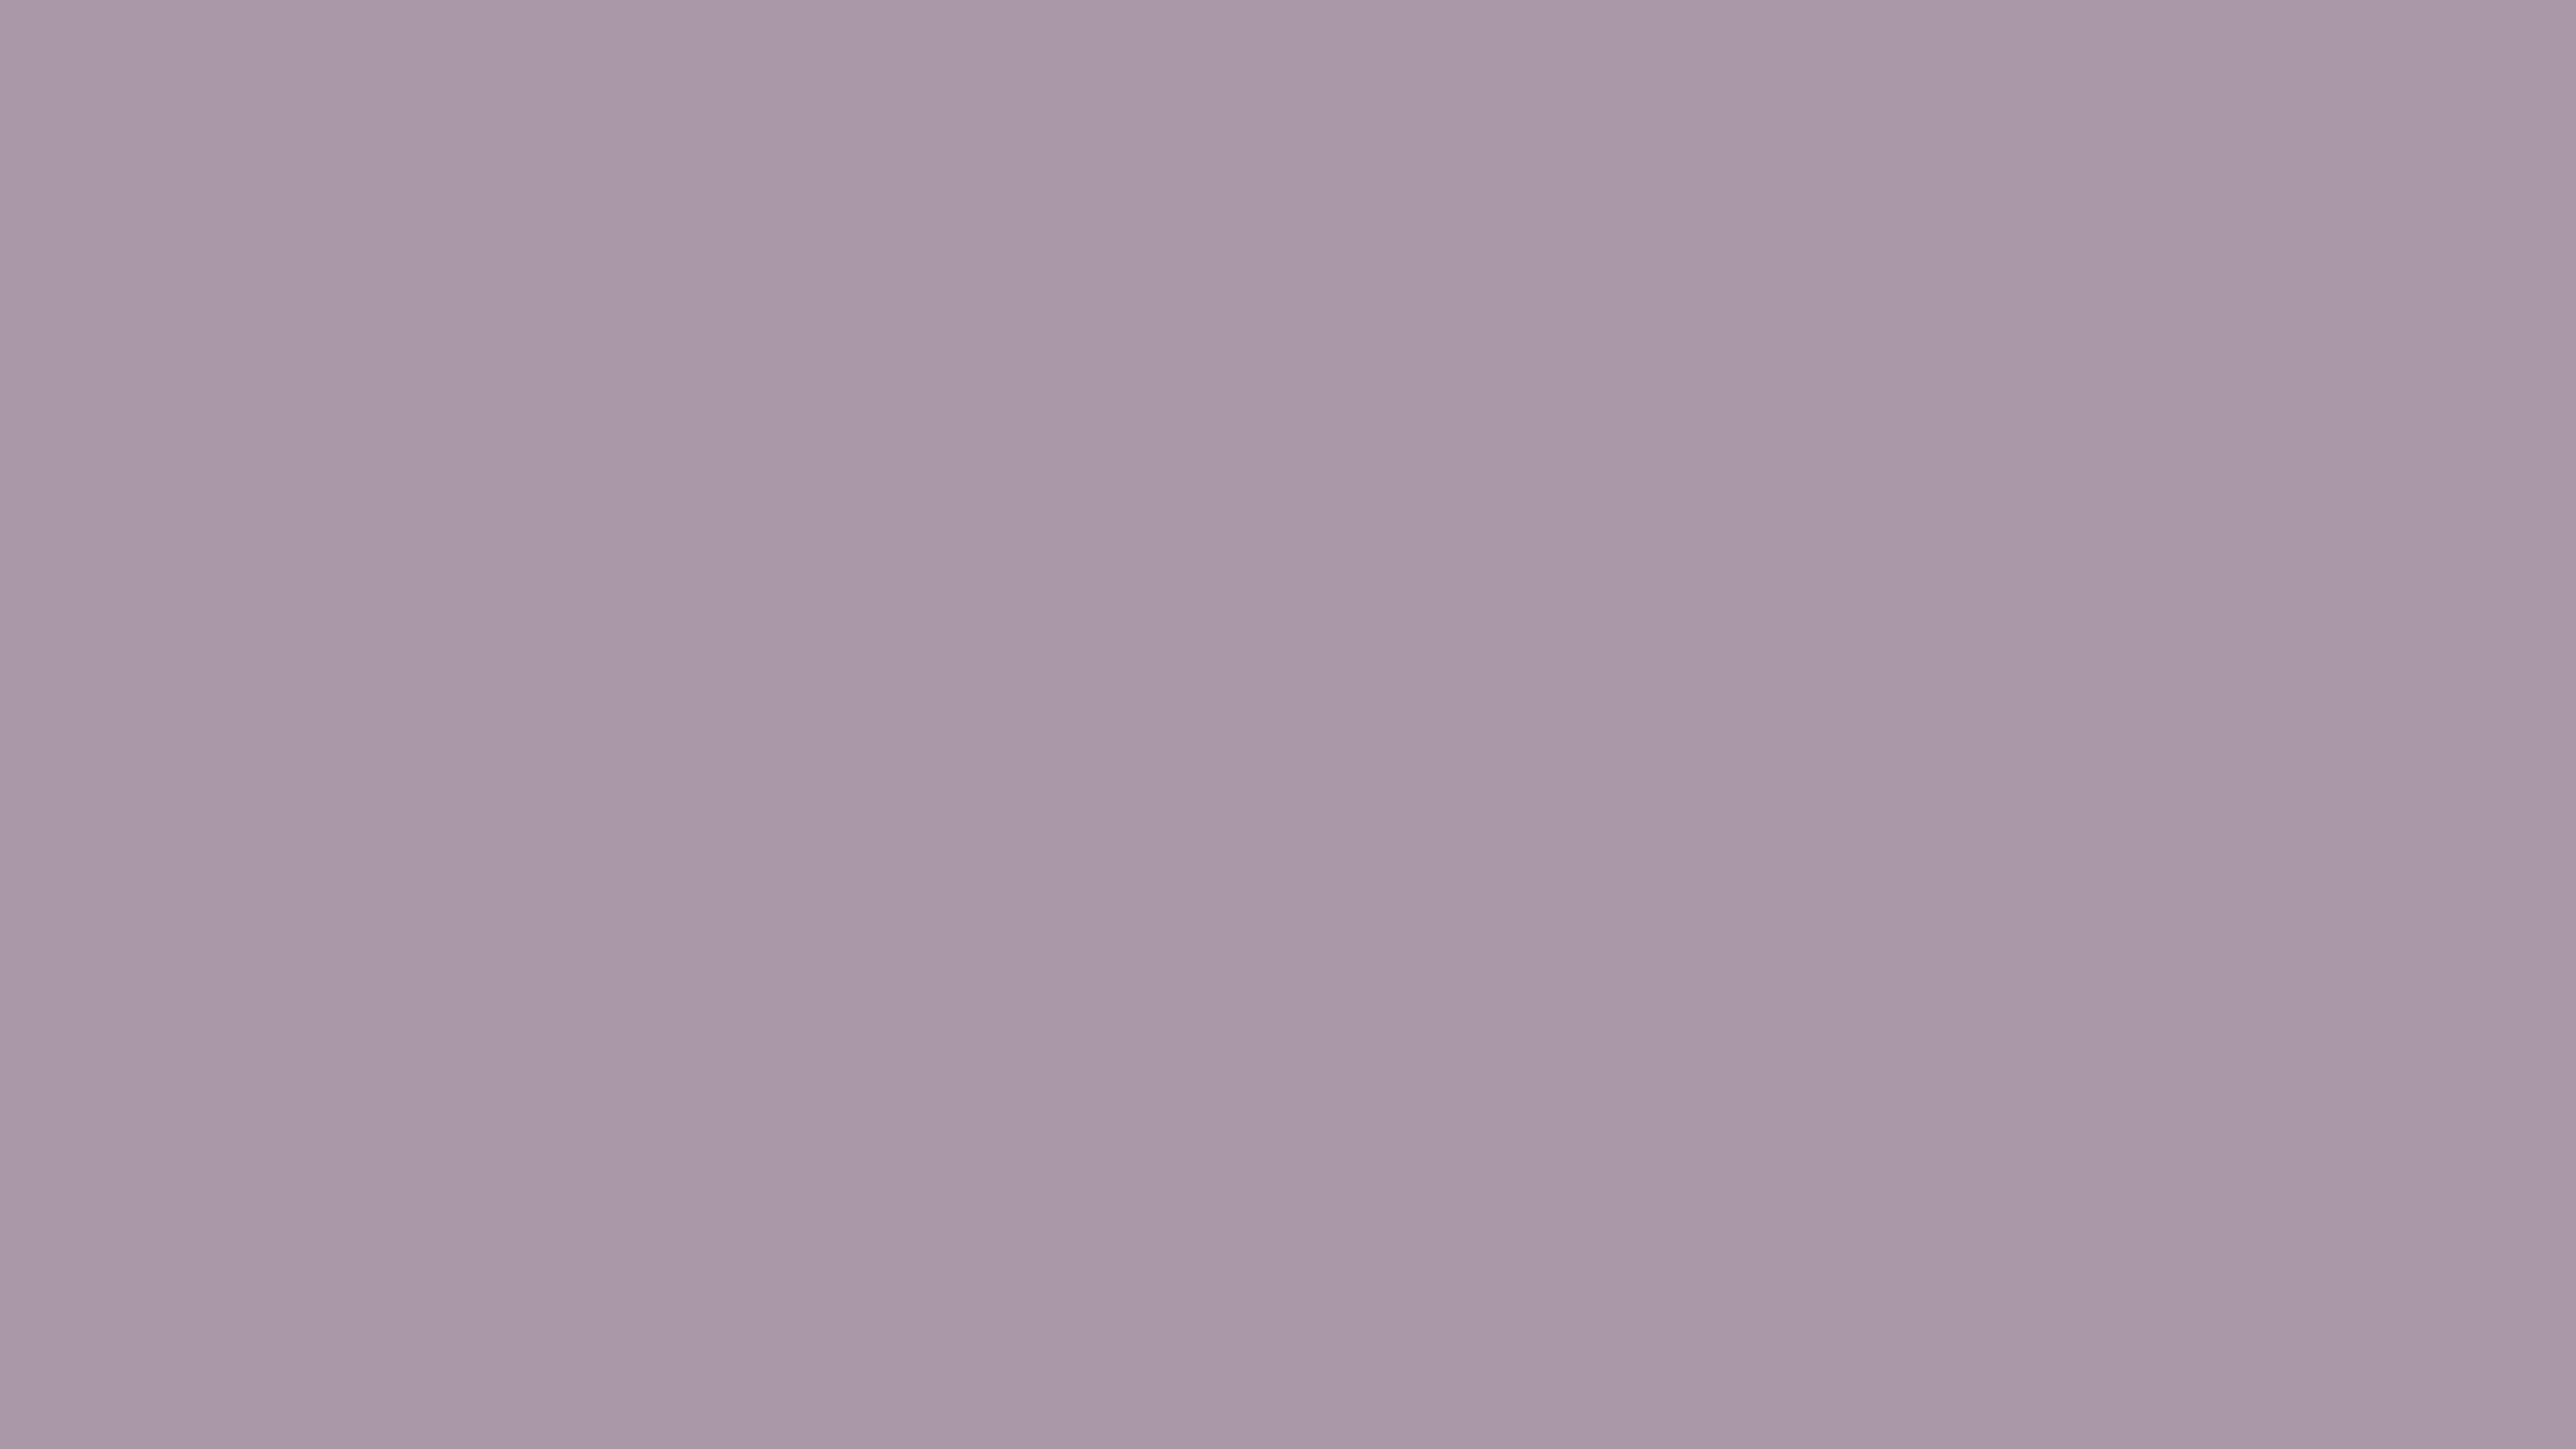 7680x4320 Rose Quartz Solid Color Background